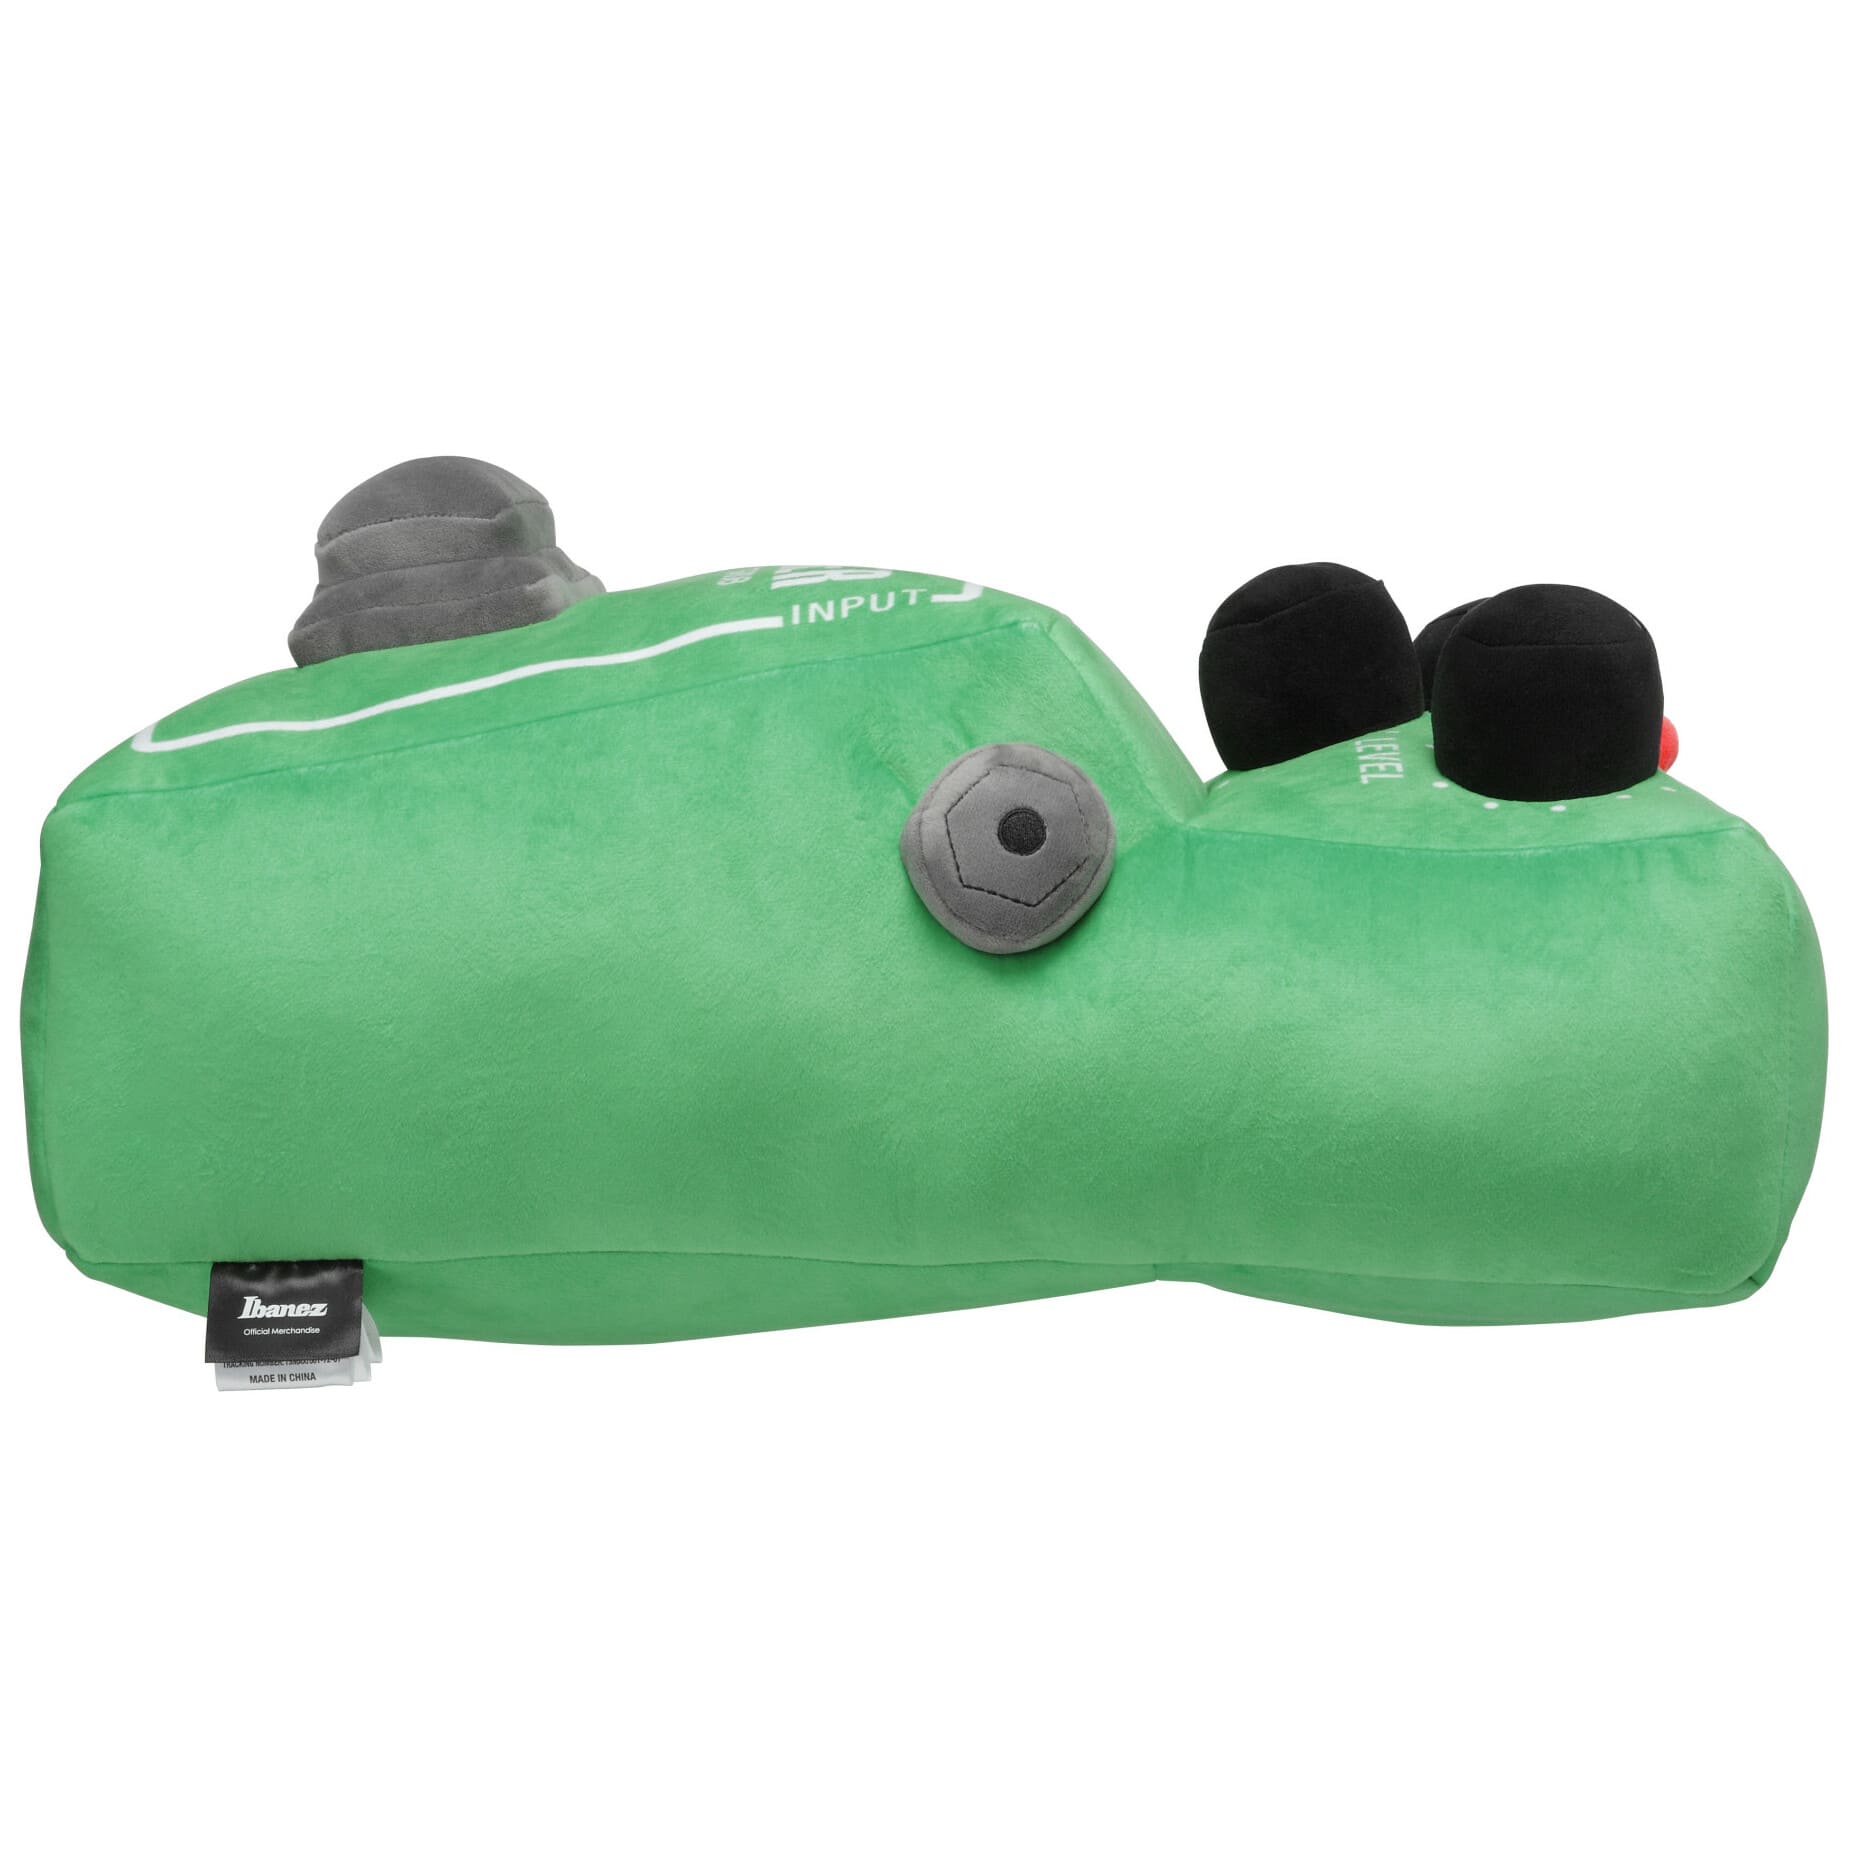 Ibanez Tube Screamer Maxi Stuffed Toy 2